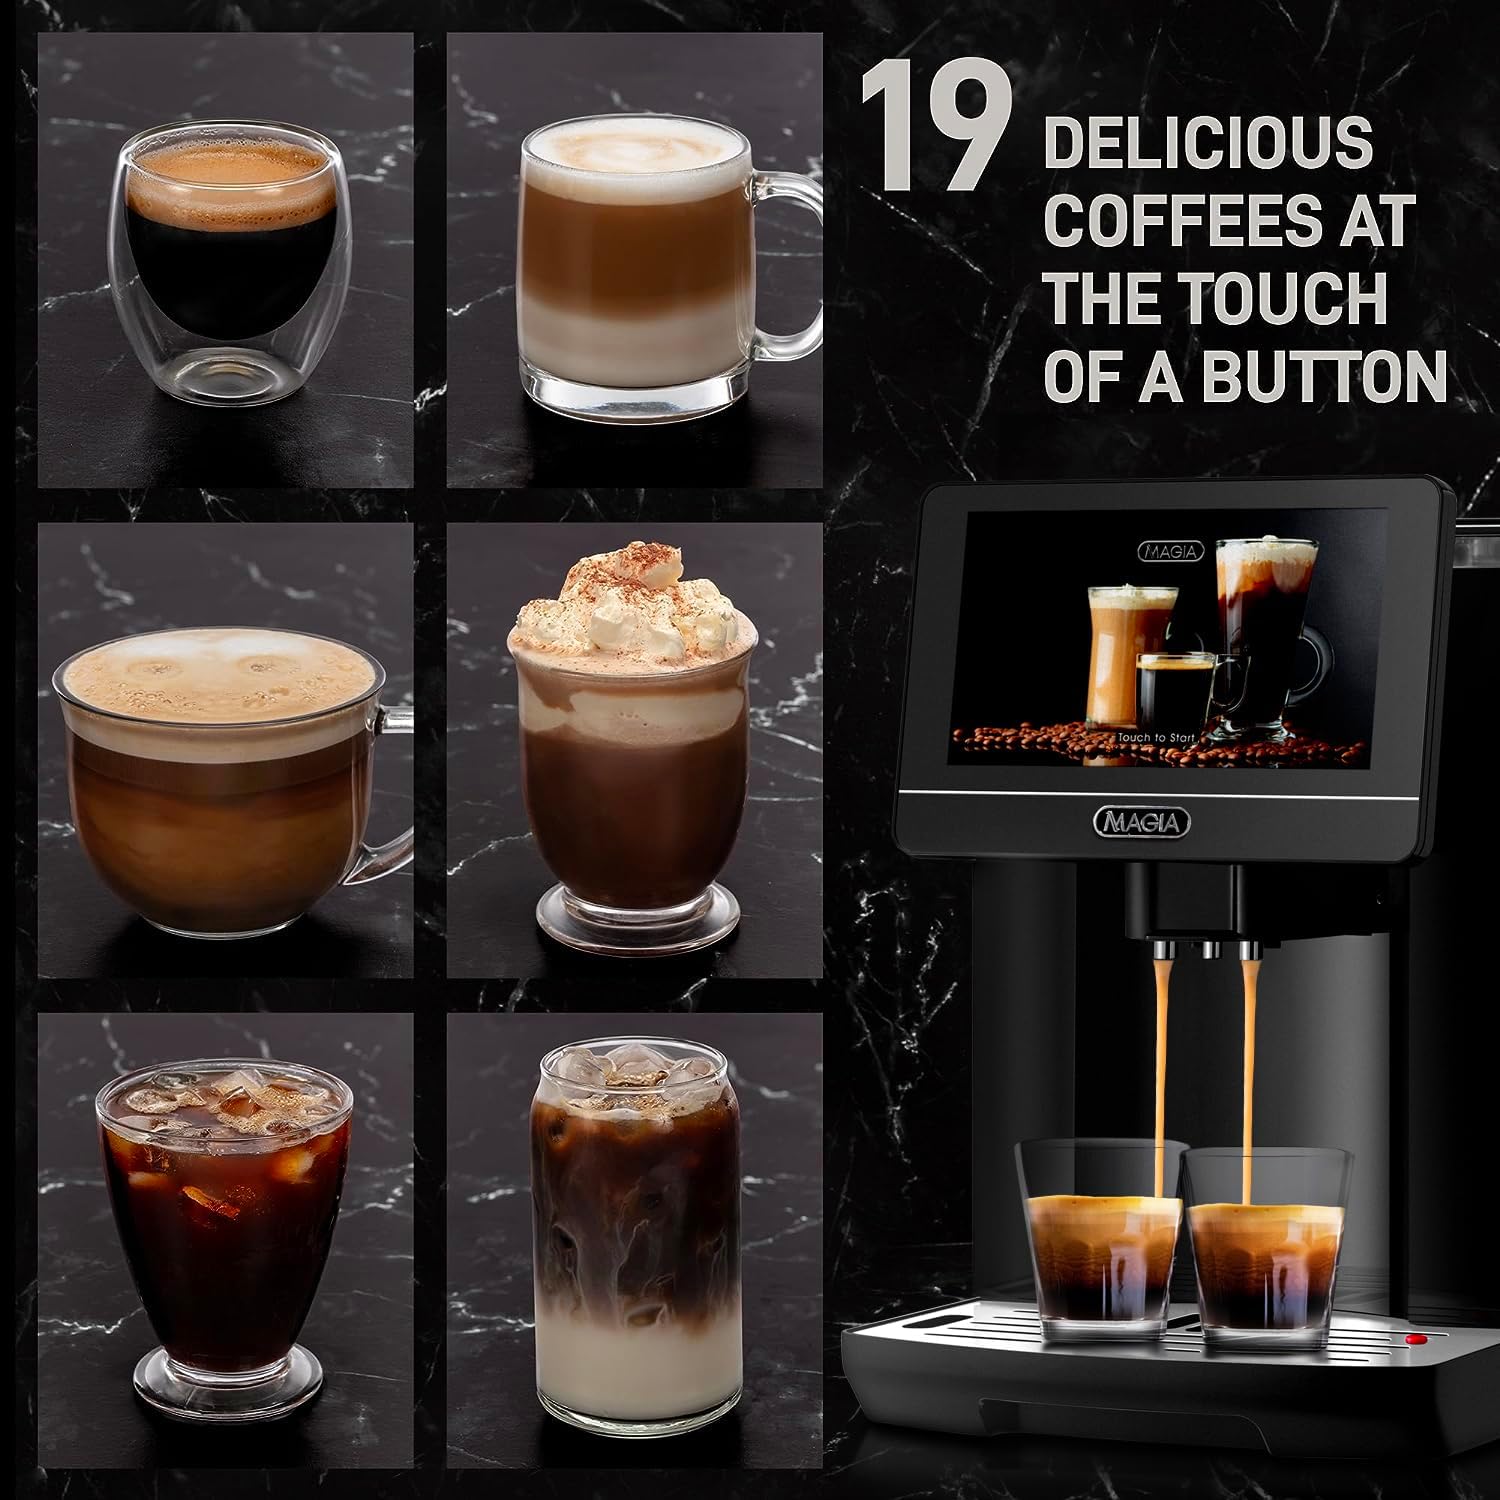 Buy Wholesale China Cappuccino Espresso Maker Touch Screen Coffee